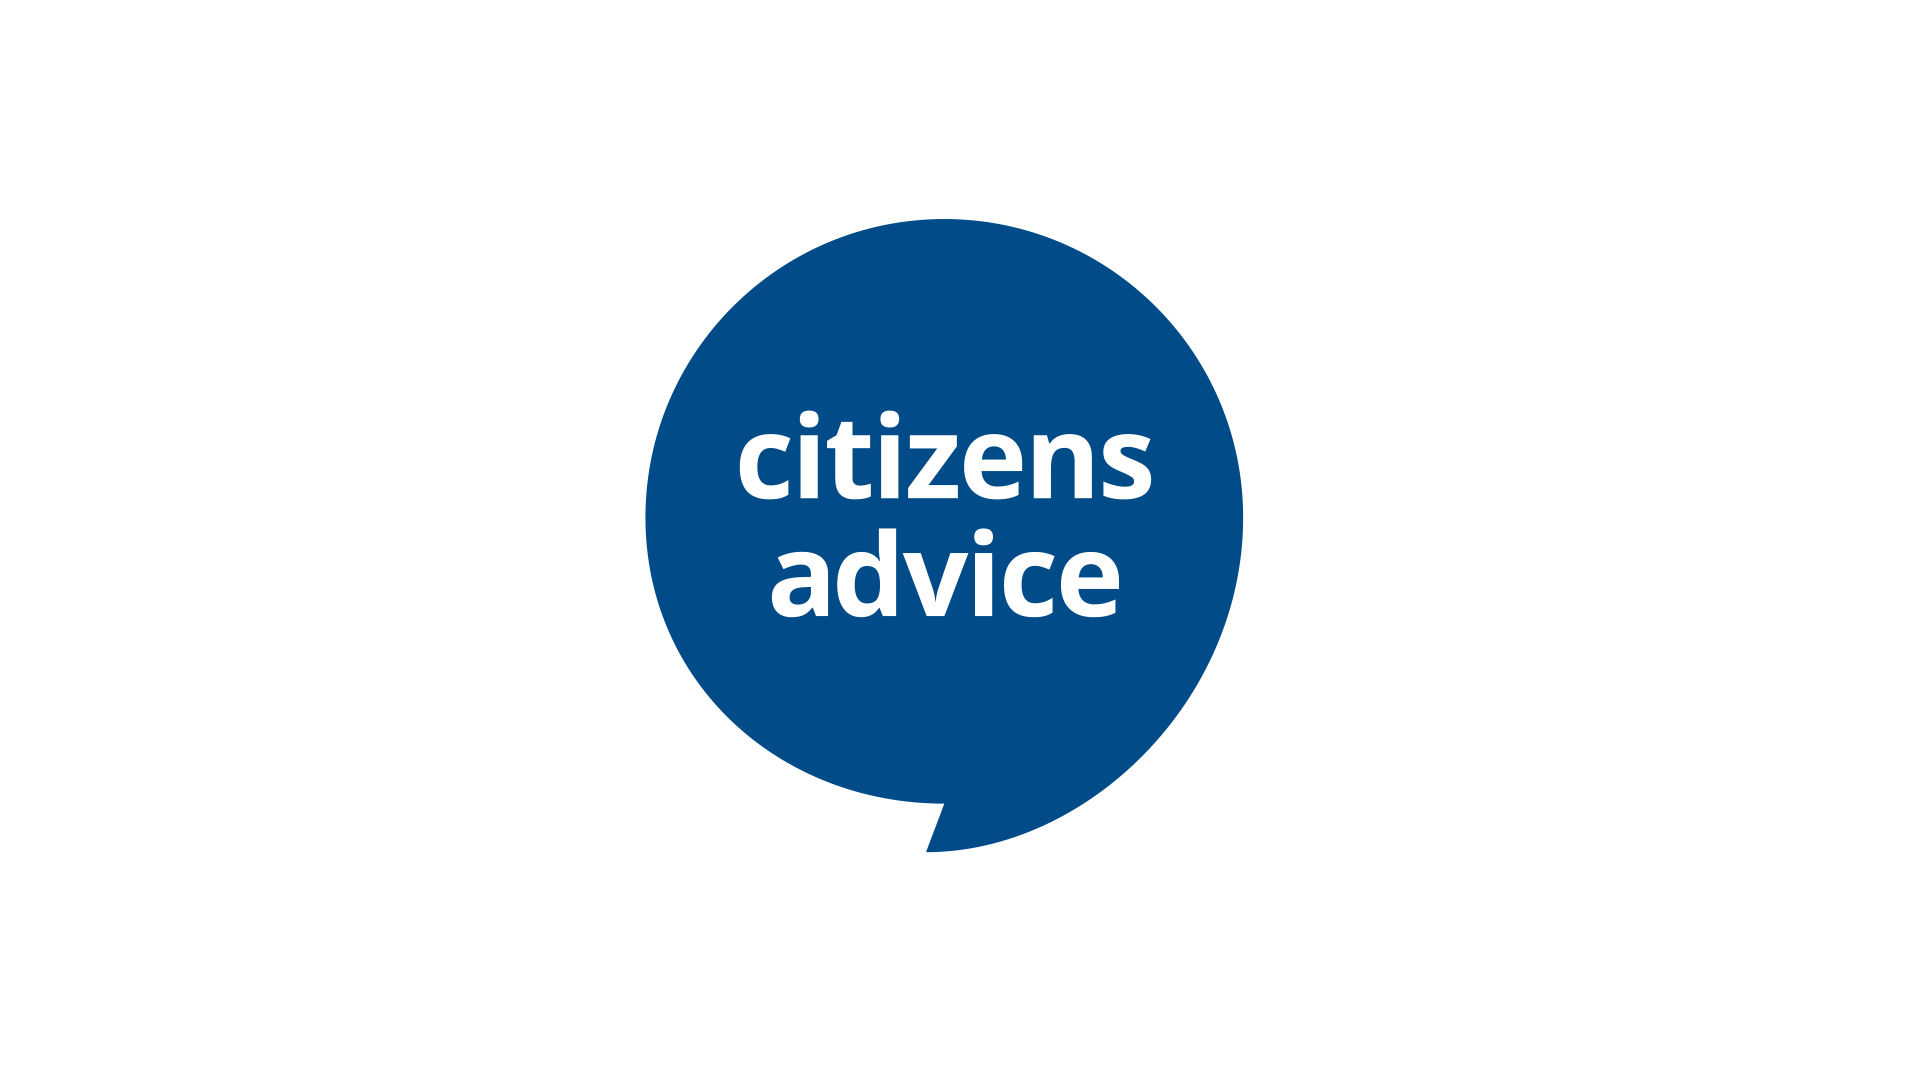 Citizens advice logo